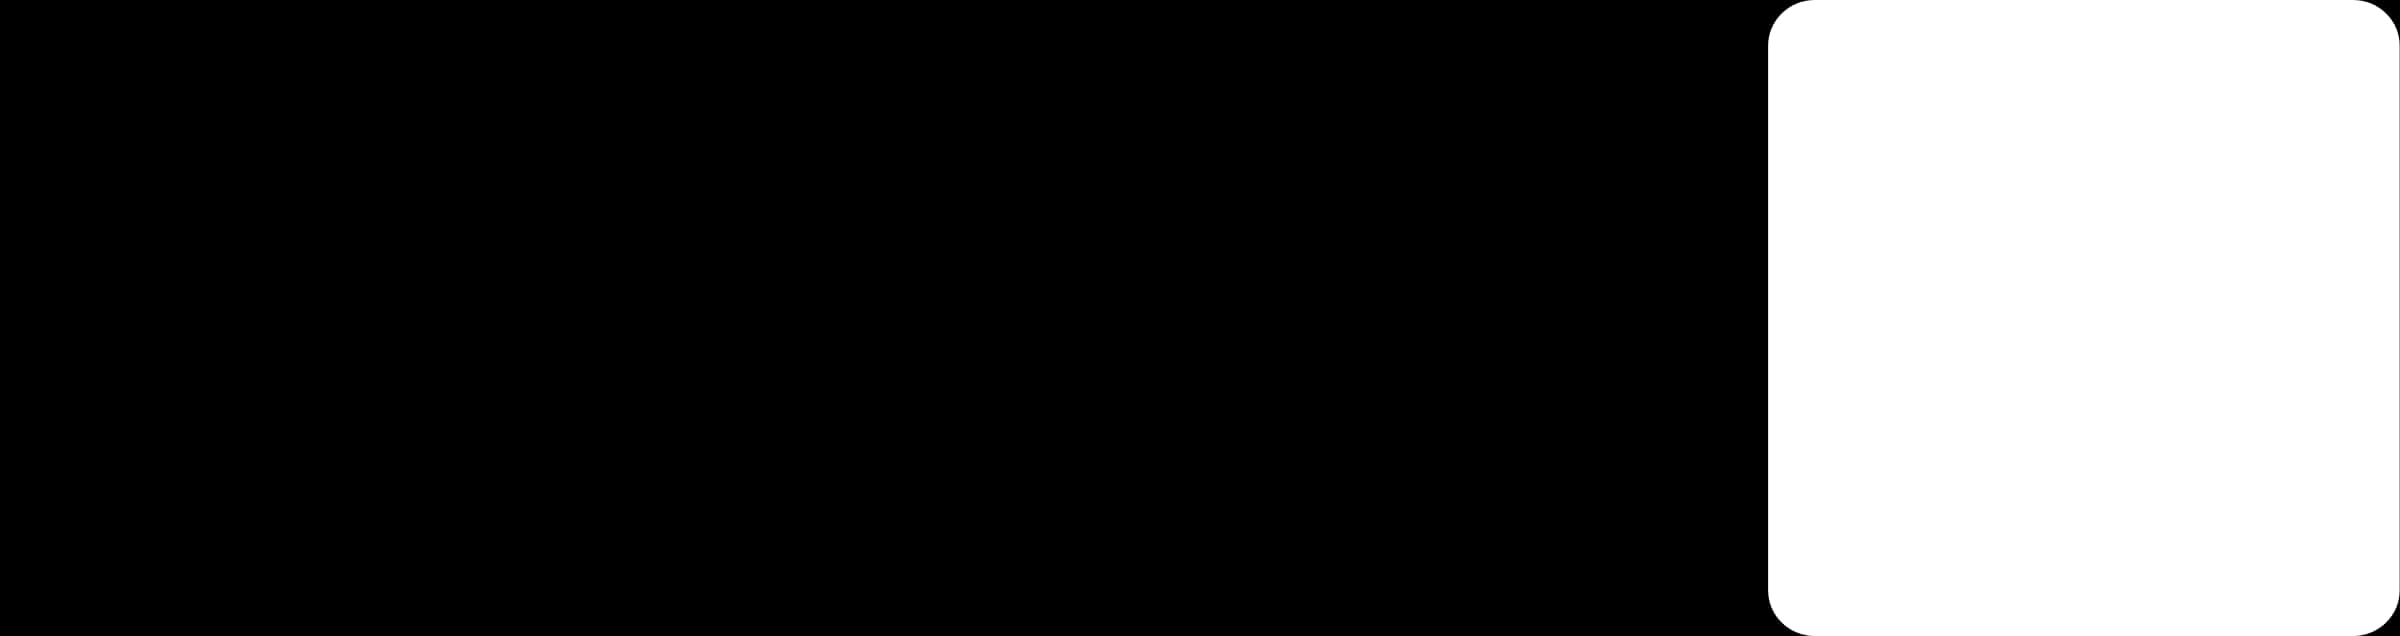 Incomplete Linkedin Logo